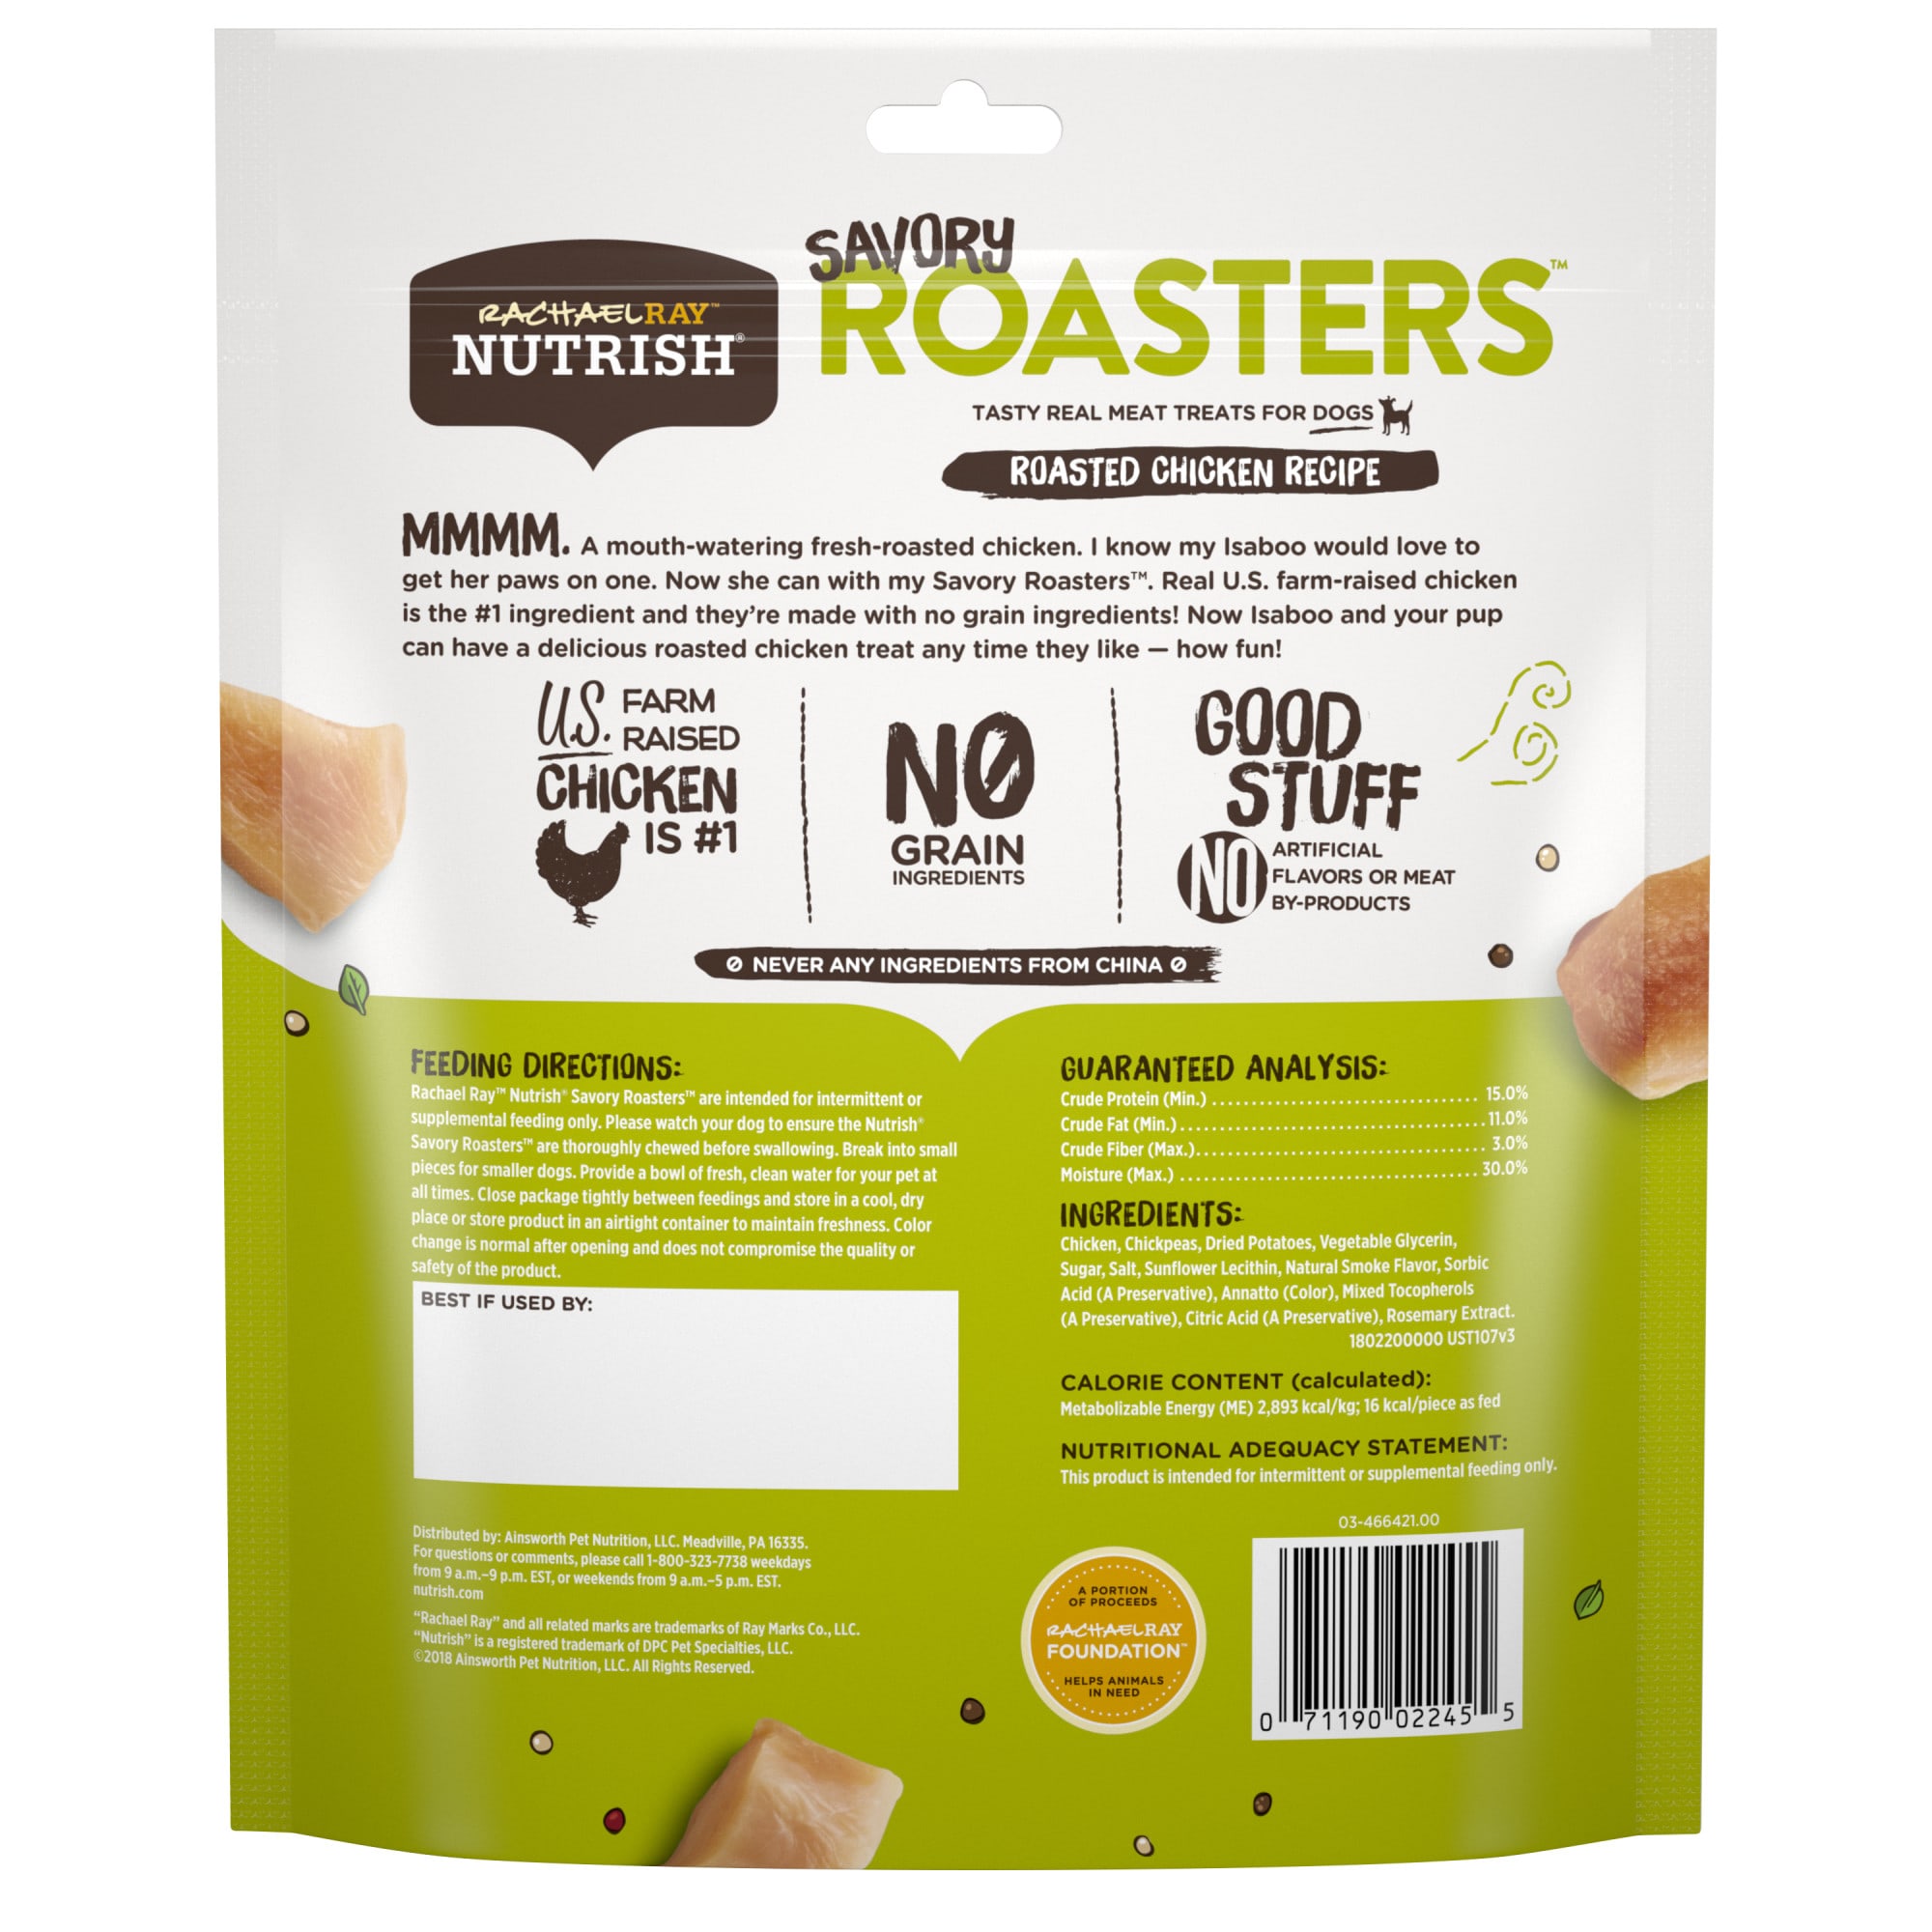 rachael ray nutrish savory roasters